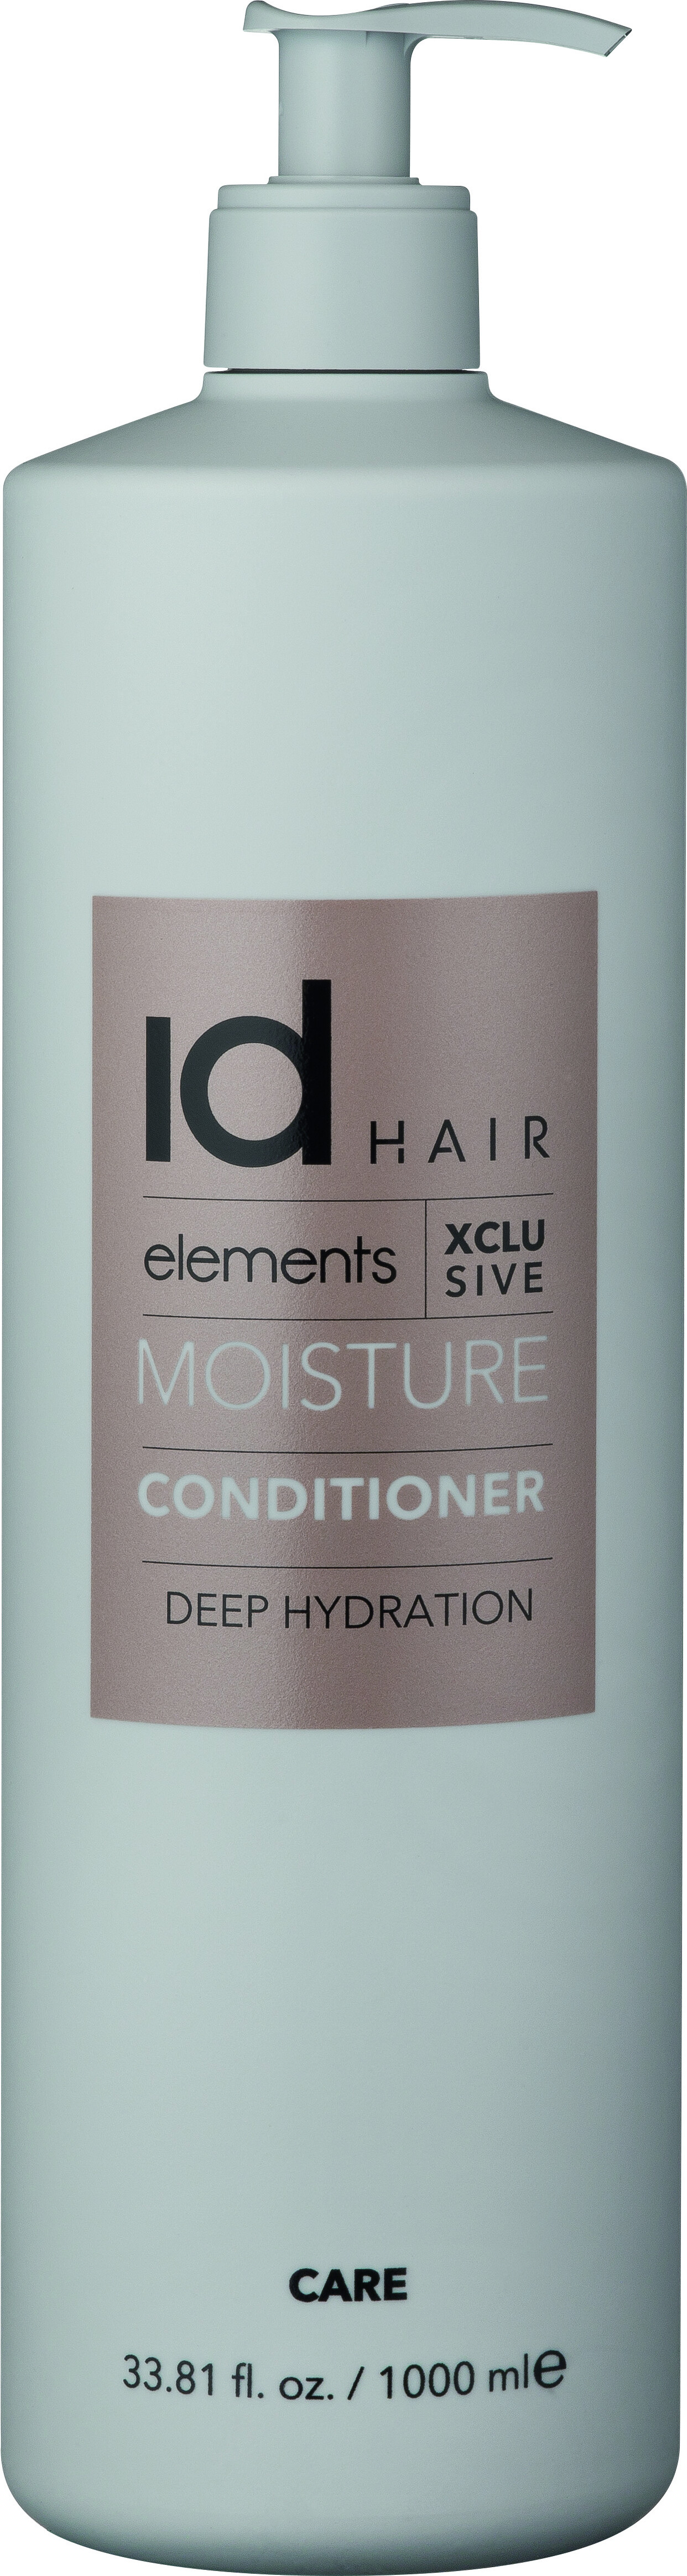 Billede af Id Hair - Elements Xclusive Moisture Conditioner 1000 Ml hos Gucca.dk